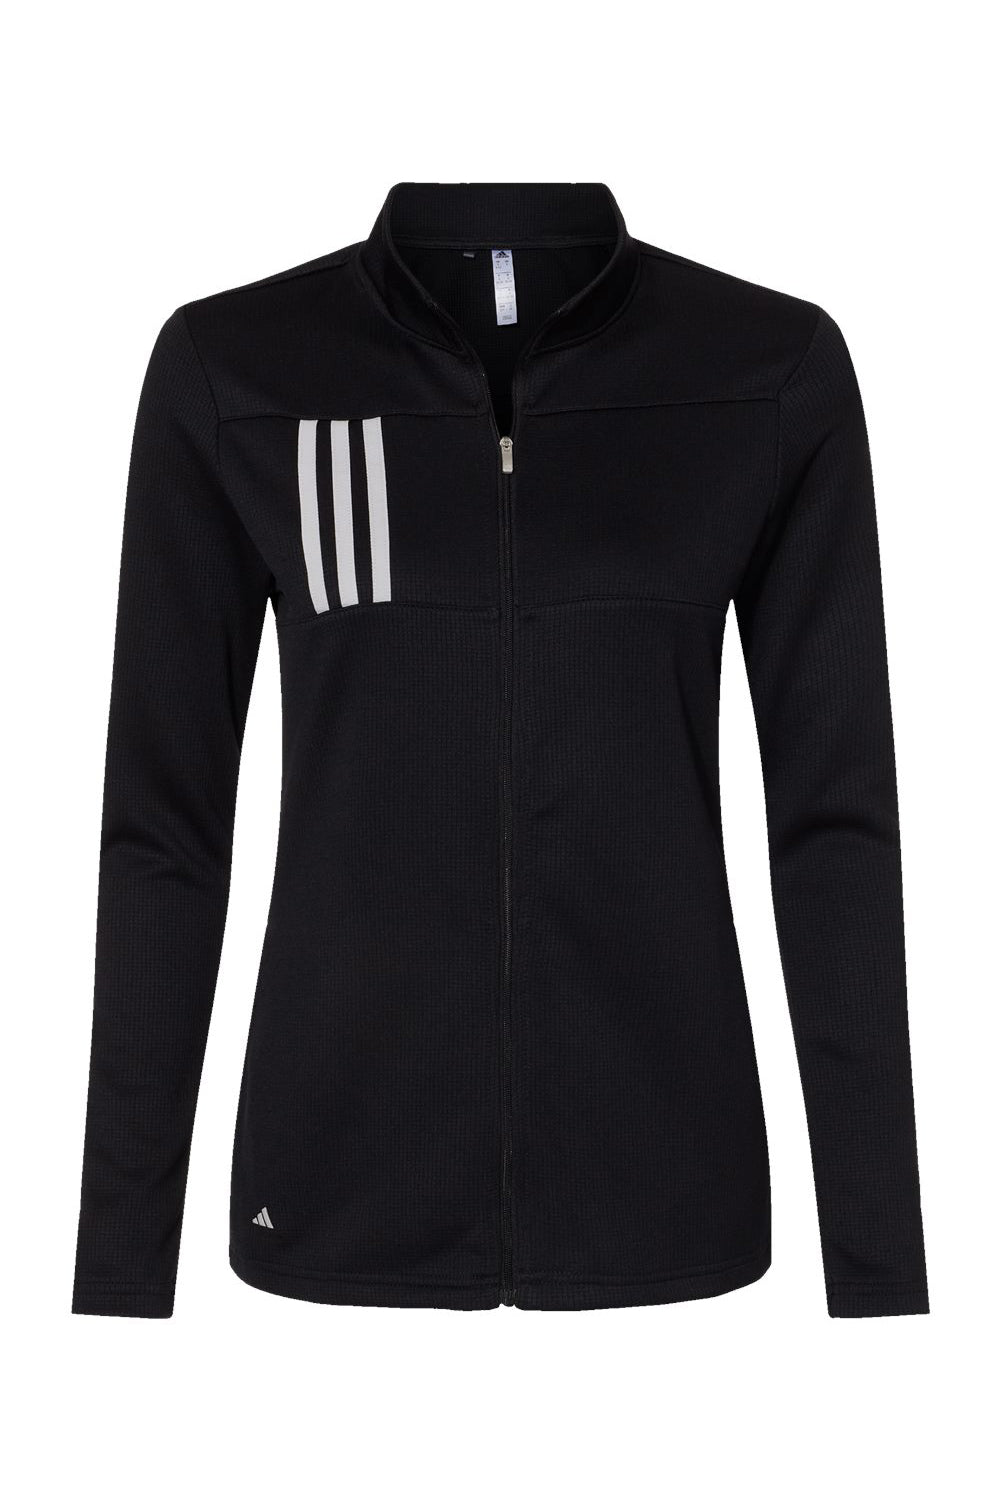 Adidas A483 Womens 3 Stripes Double Knit Moisture Wicking 1/4 Zip Sweatshirt Black Flat Front